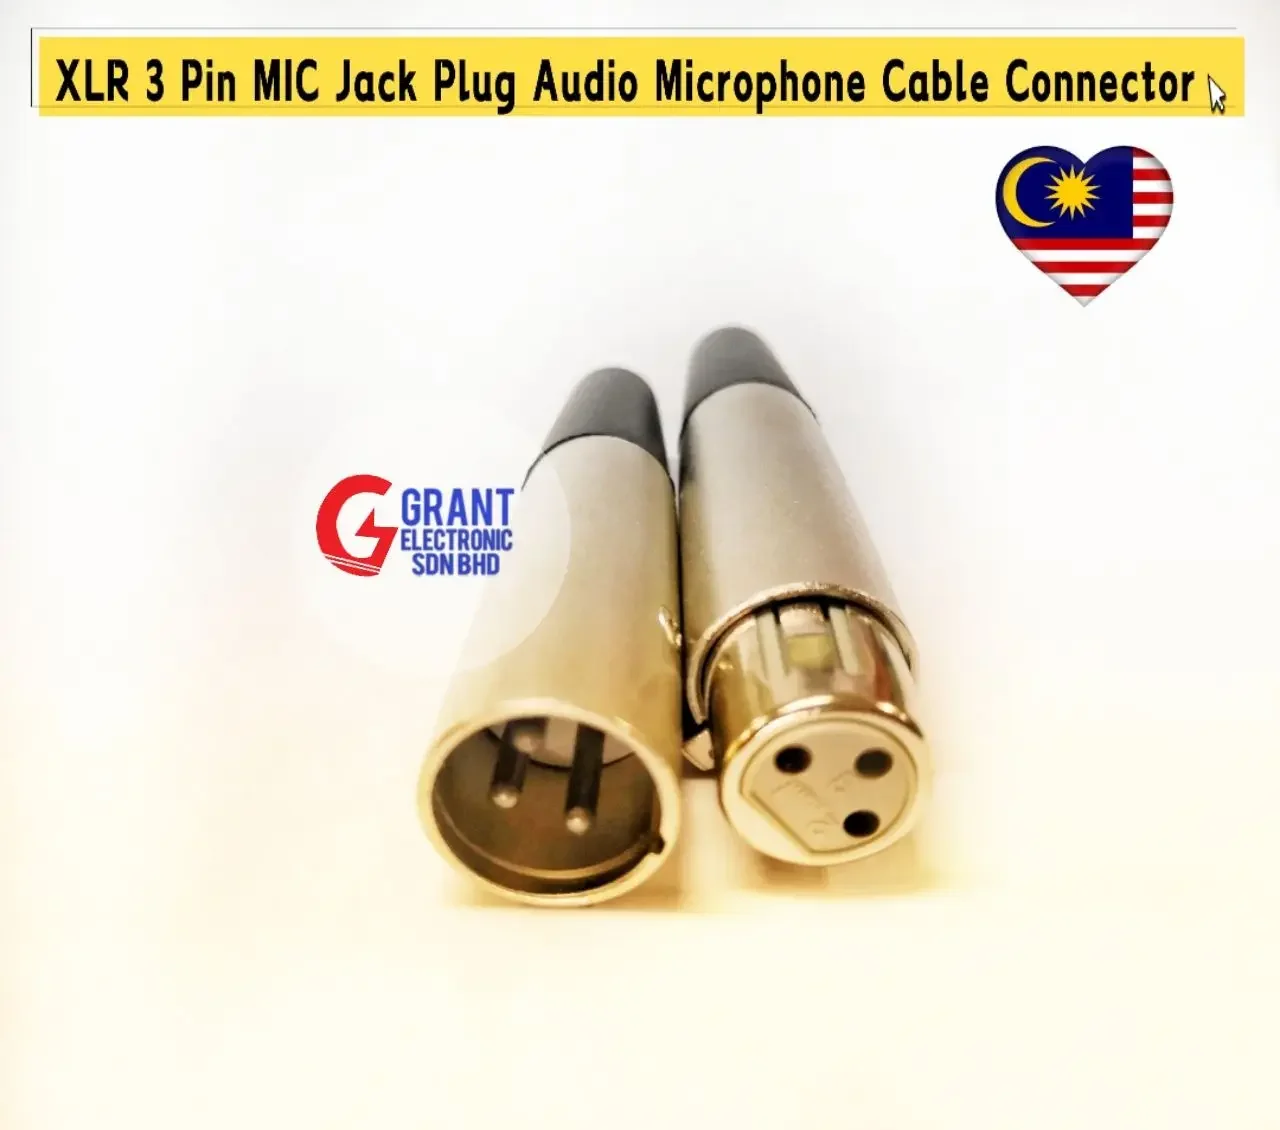 XLR 3 Pin Female Male MIC Jack Plug Audio Microphone Cable Connector Canon Plug